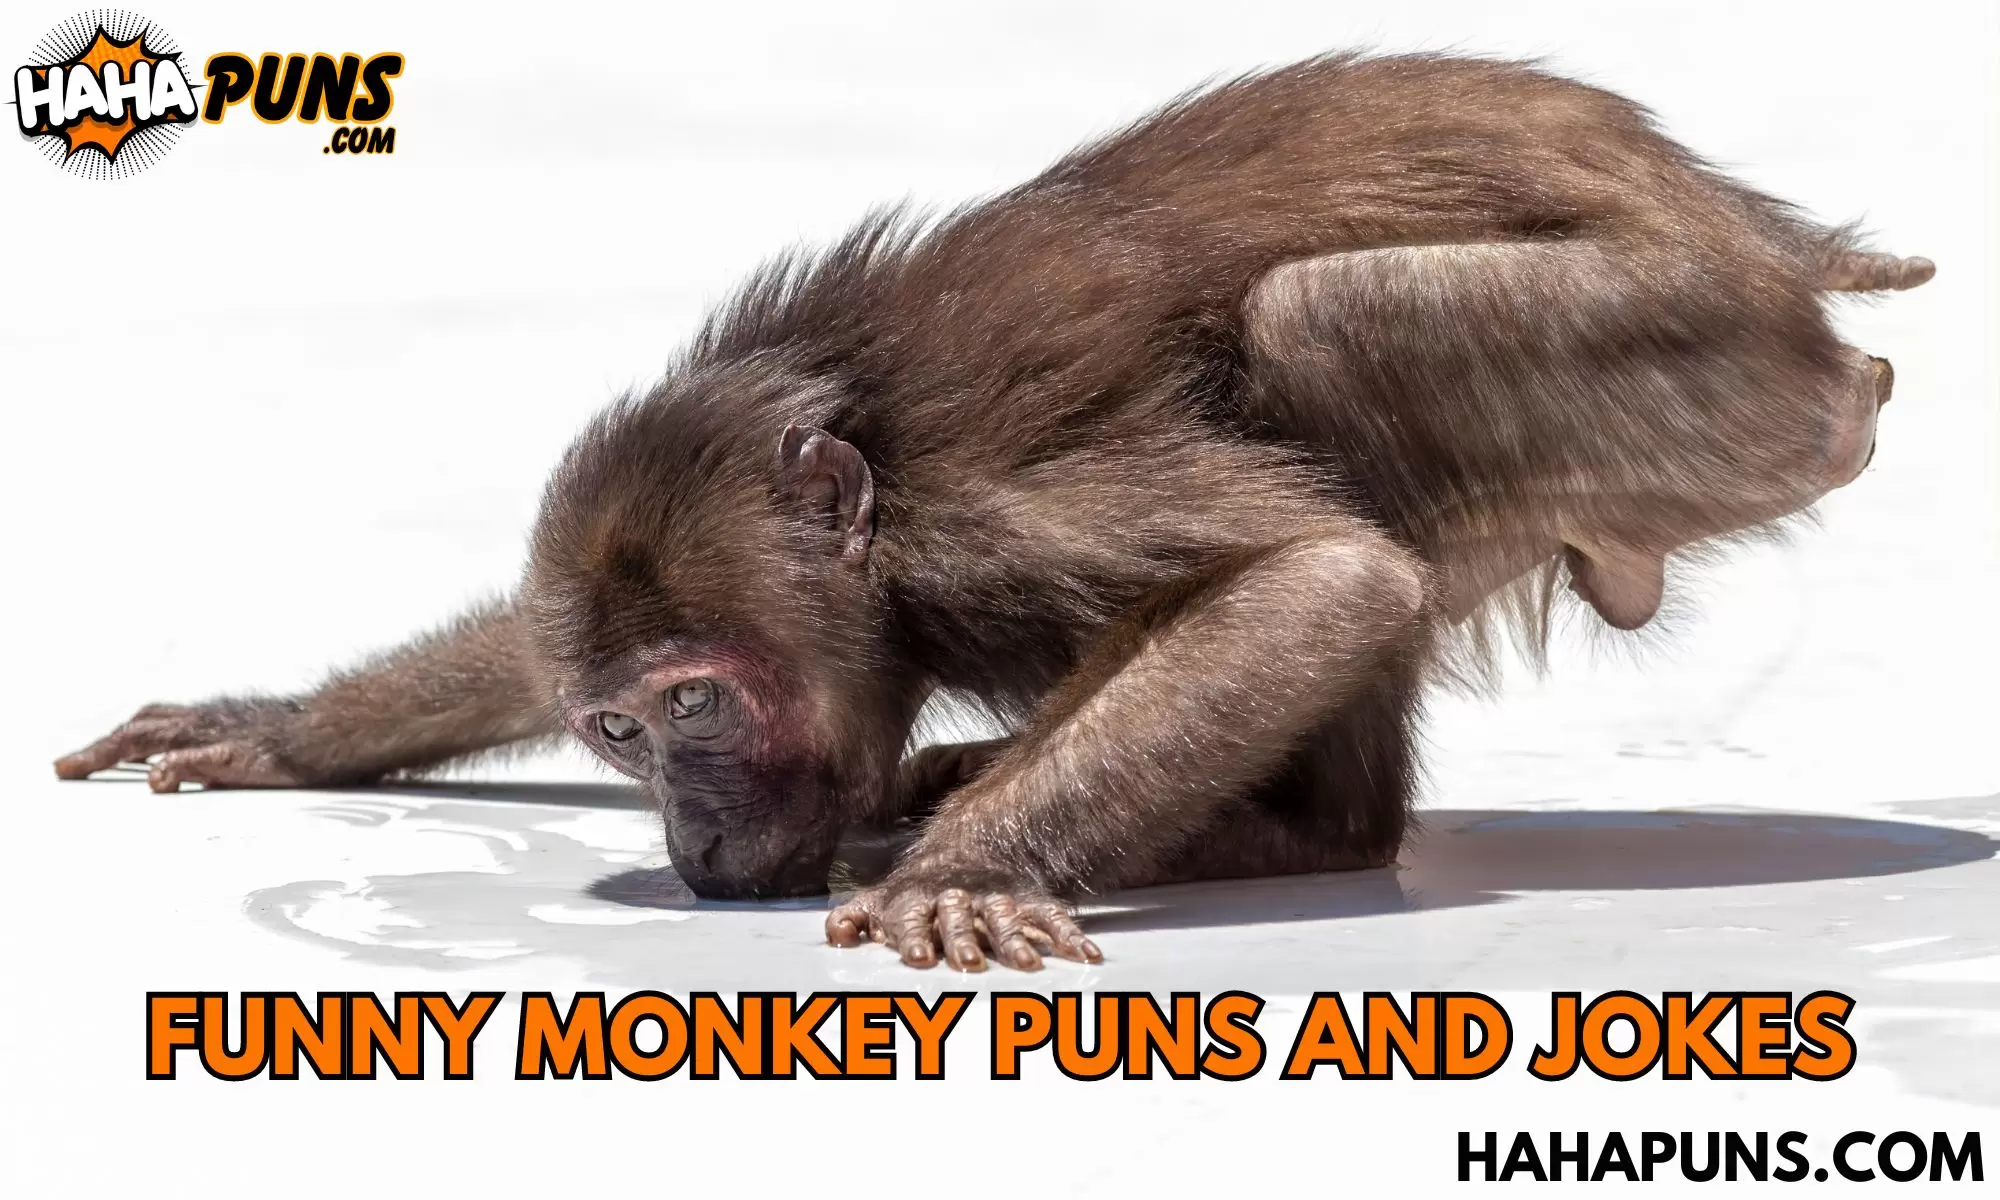 Funny Monkey Puns and Jokes